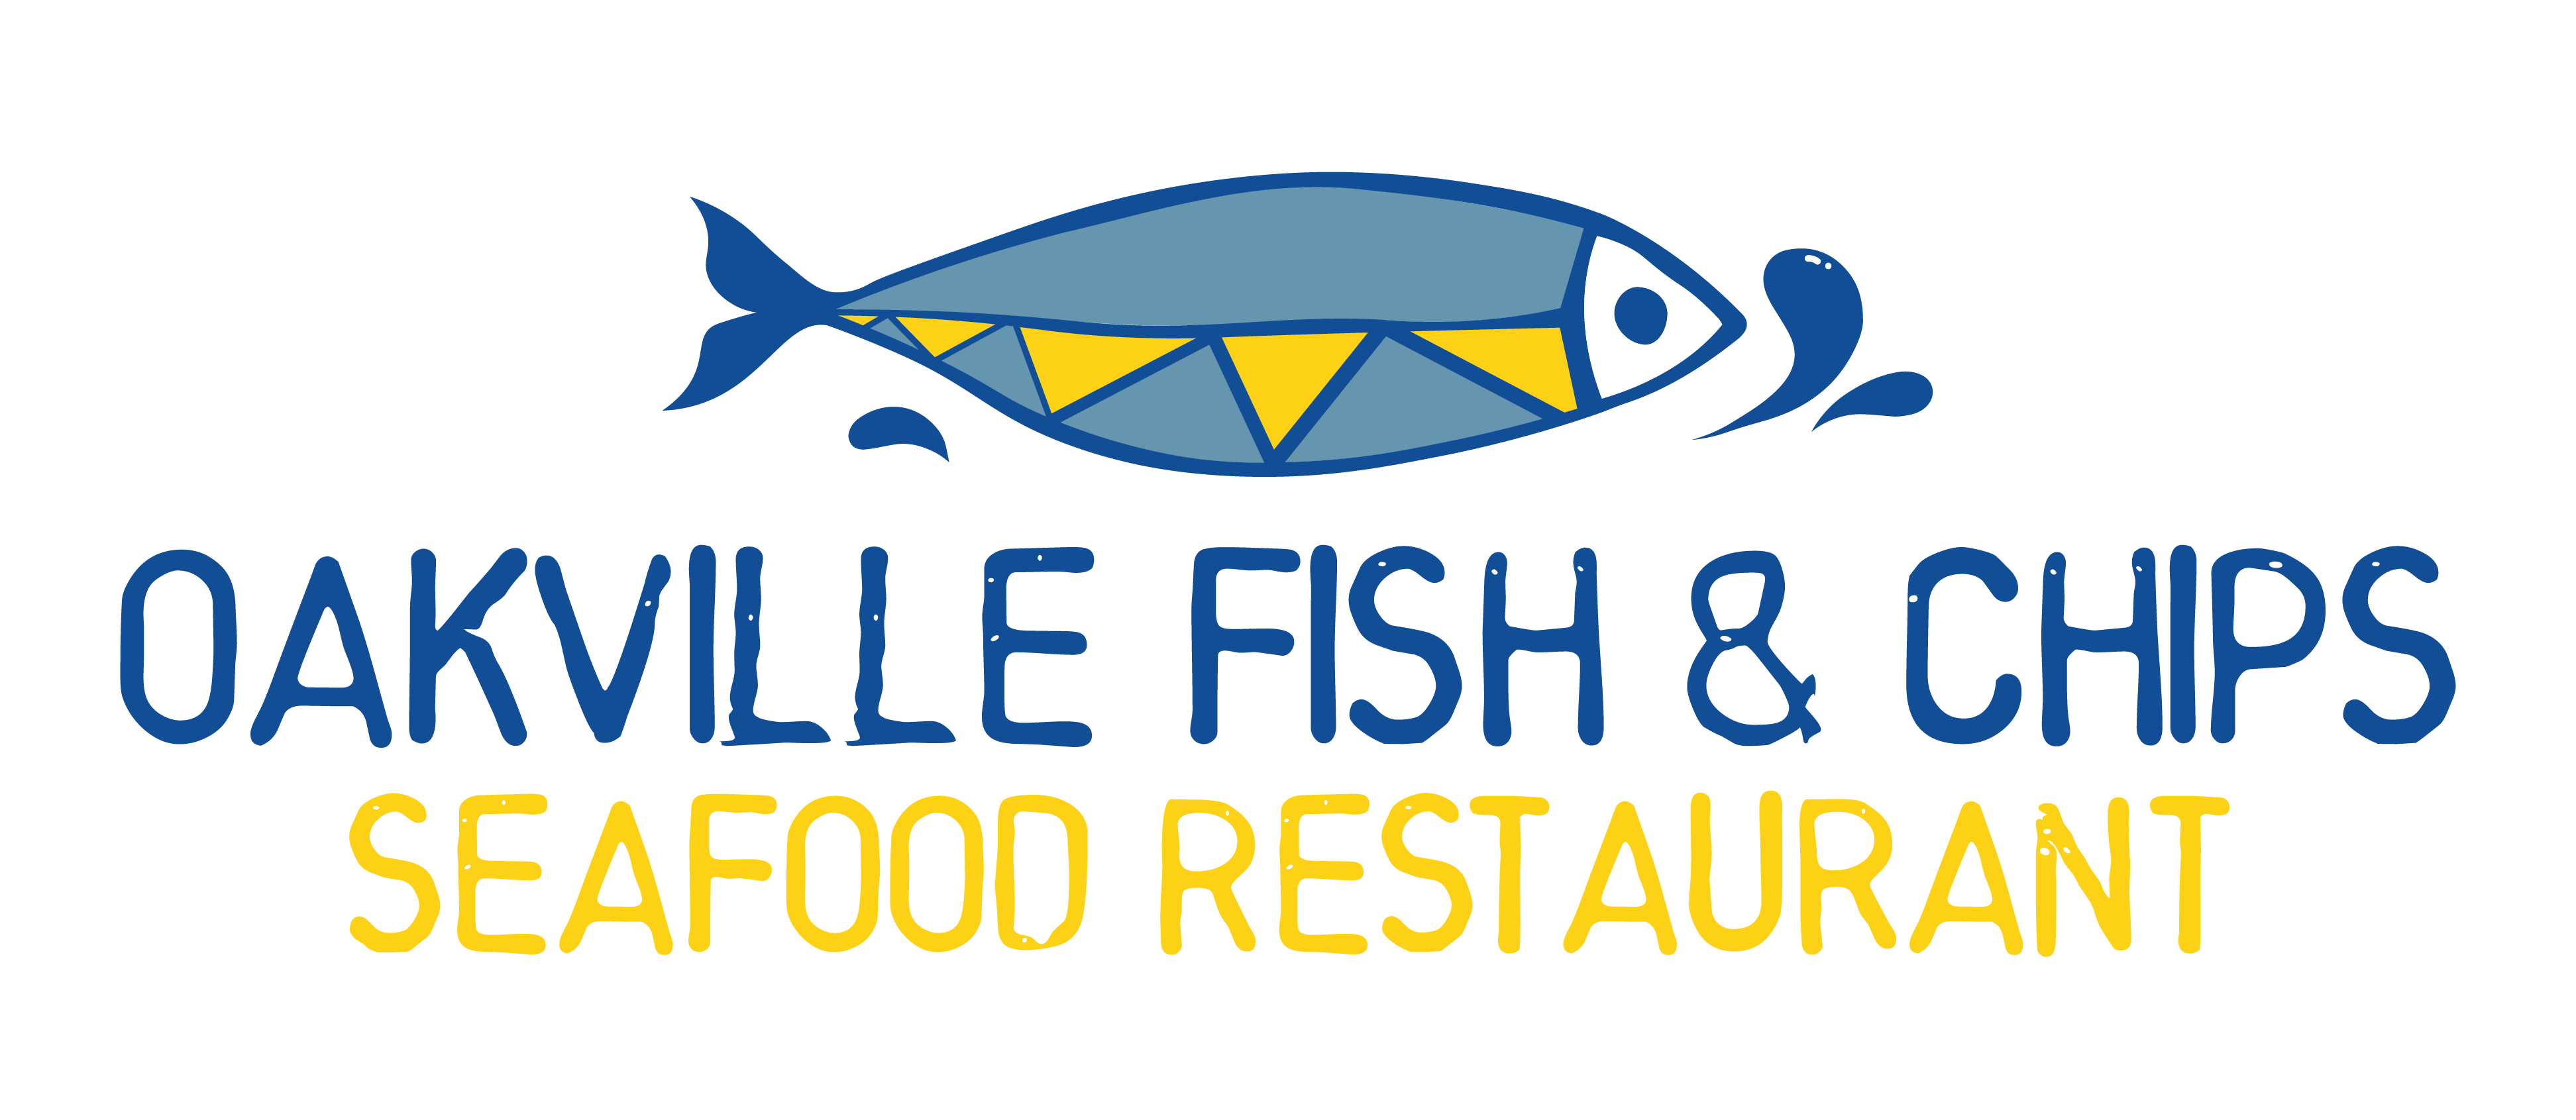 Oakville Fish & Chips Seafood Restaurant_Logo-01